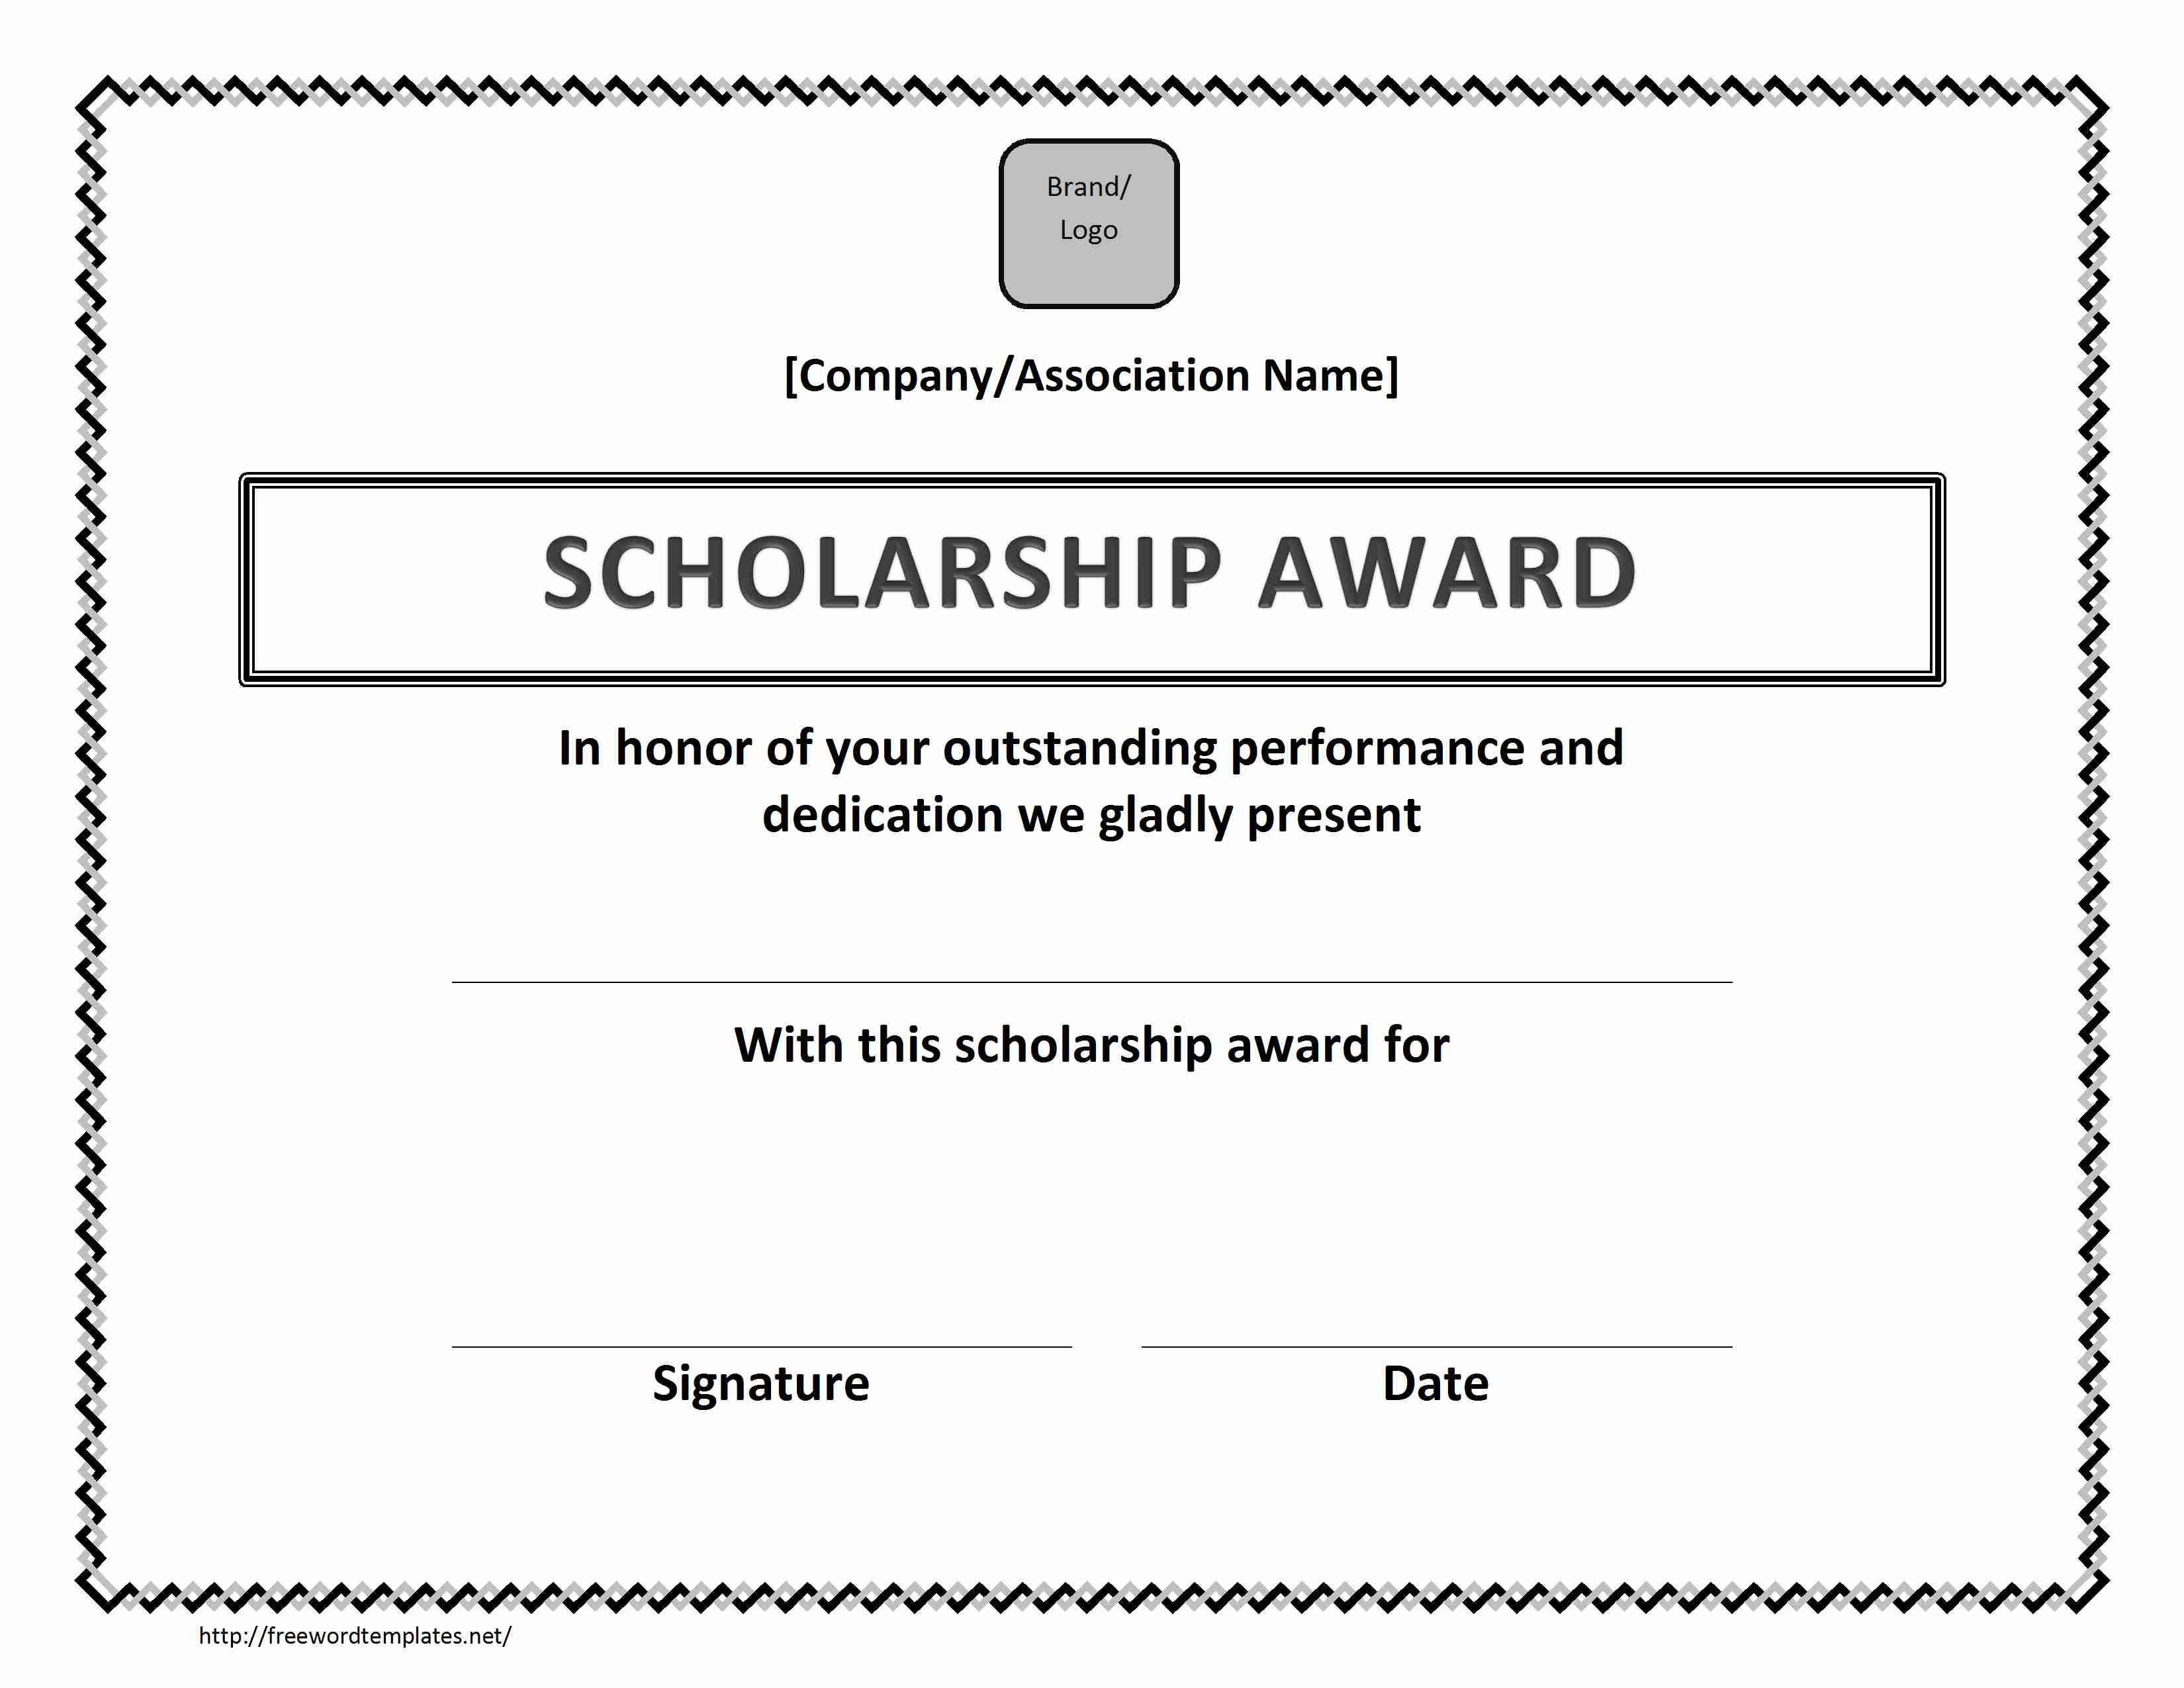 Scholarship Award Certificate for Scholarship Certificate Template